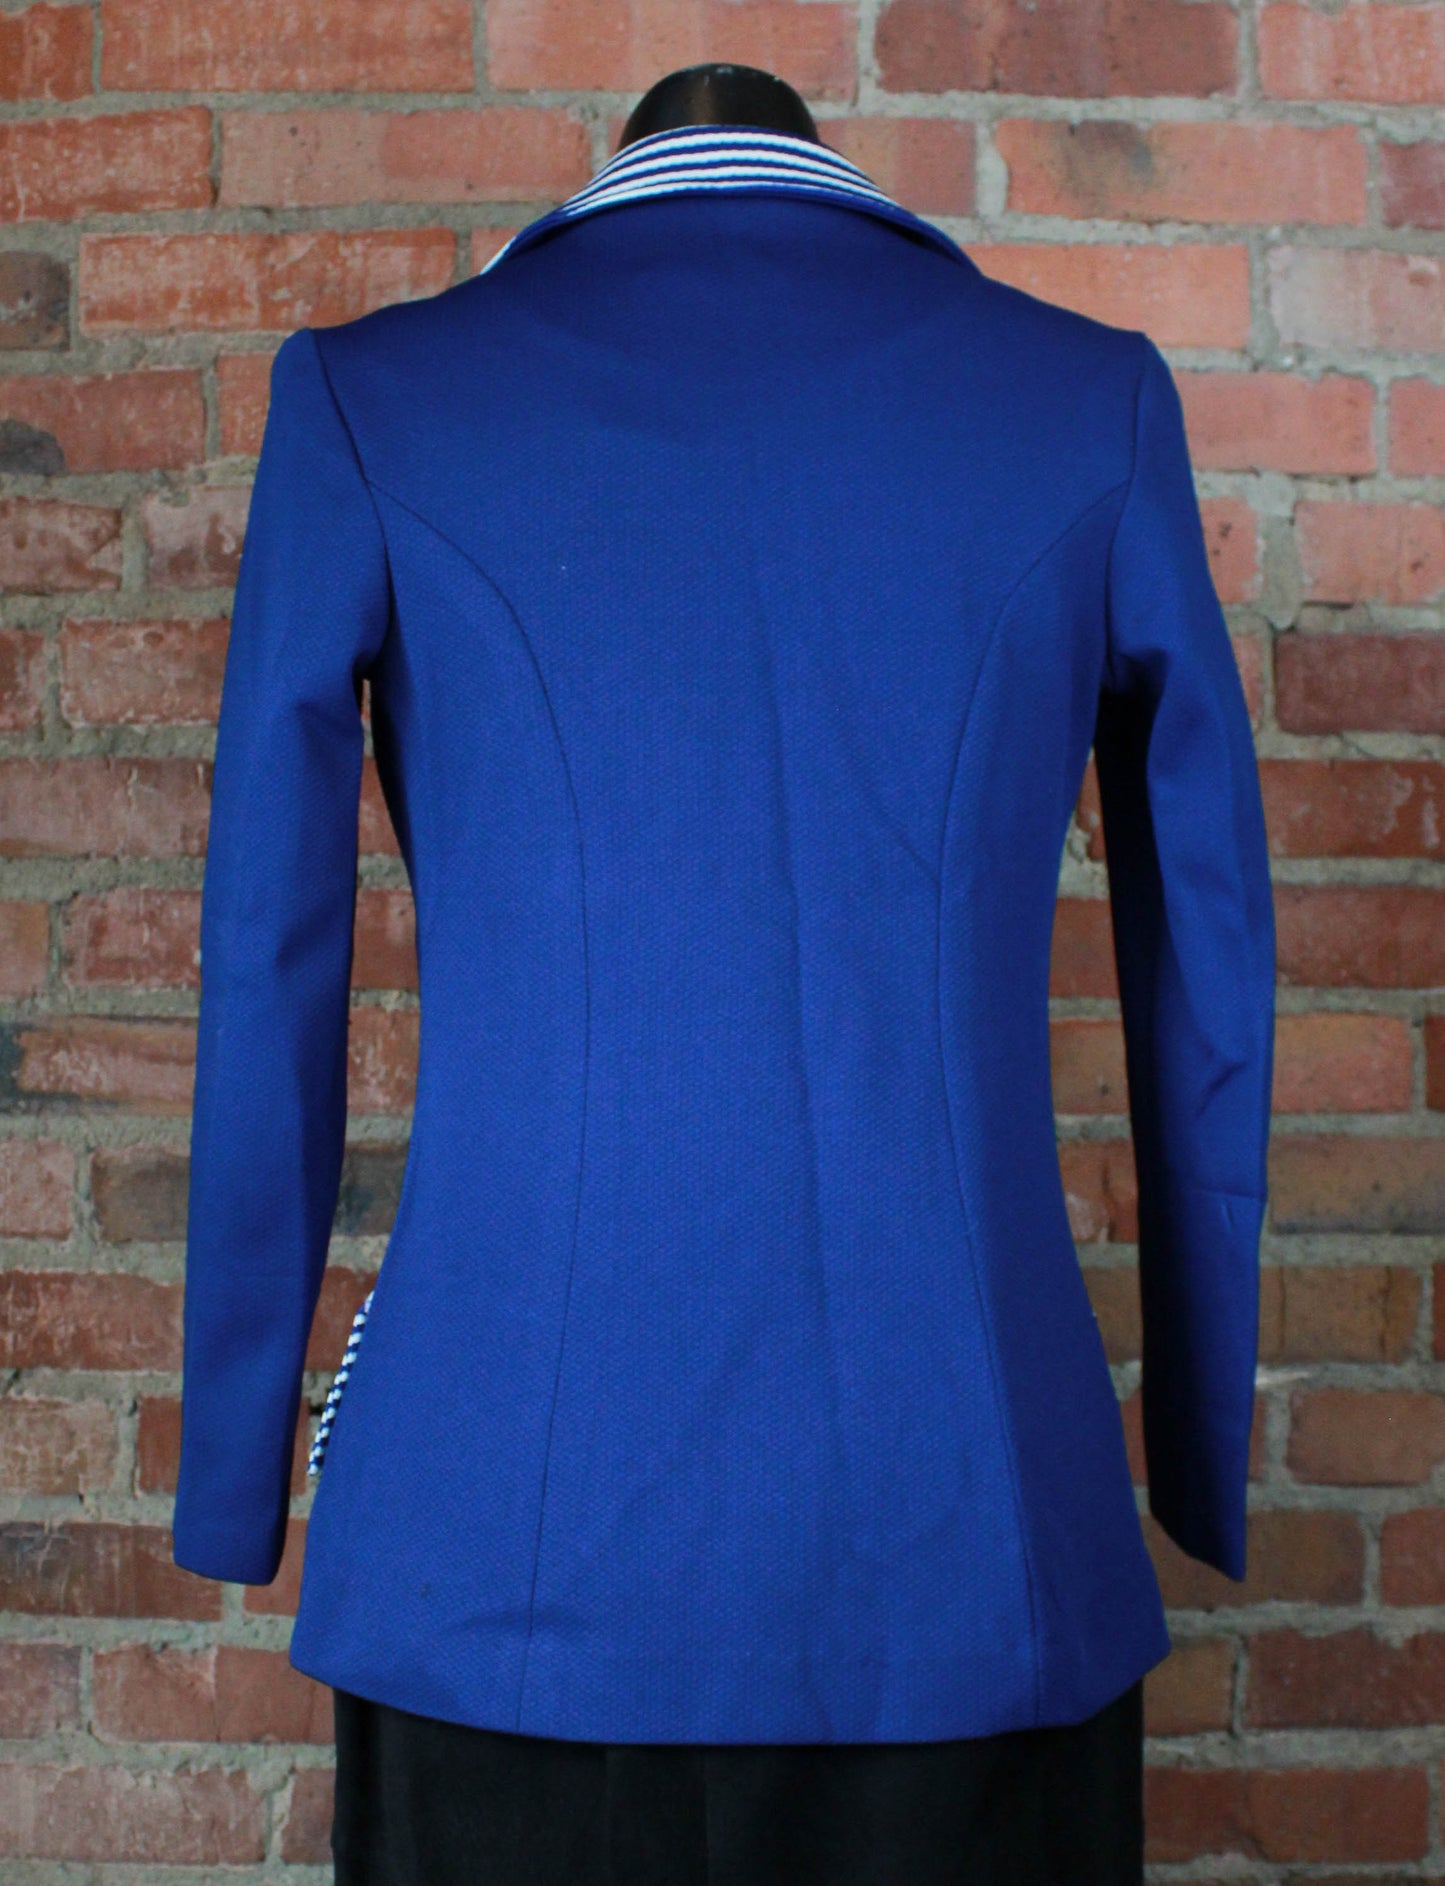 Women's Vintage 70's Montgomery Ward Blazer Jacket Blue Striped Small